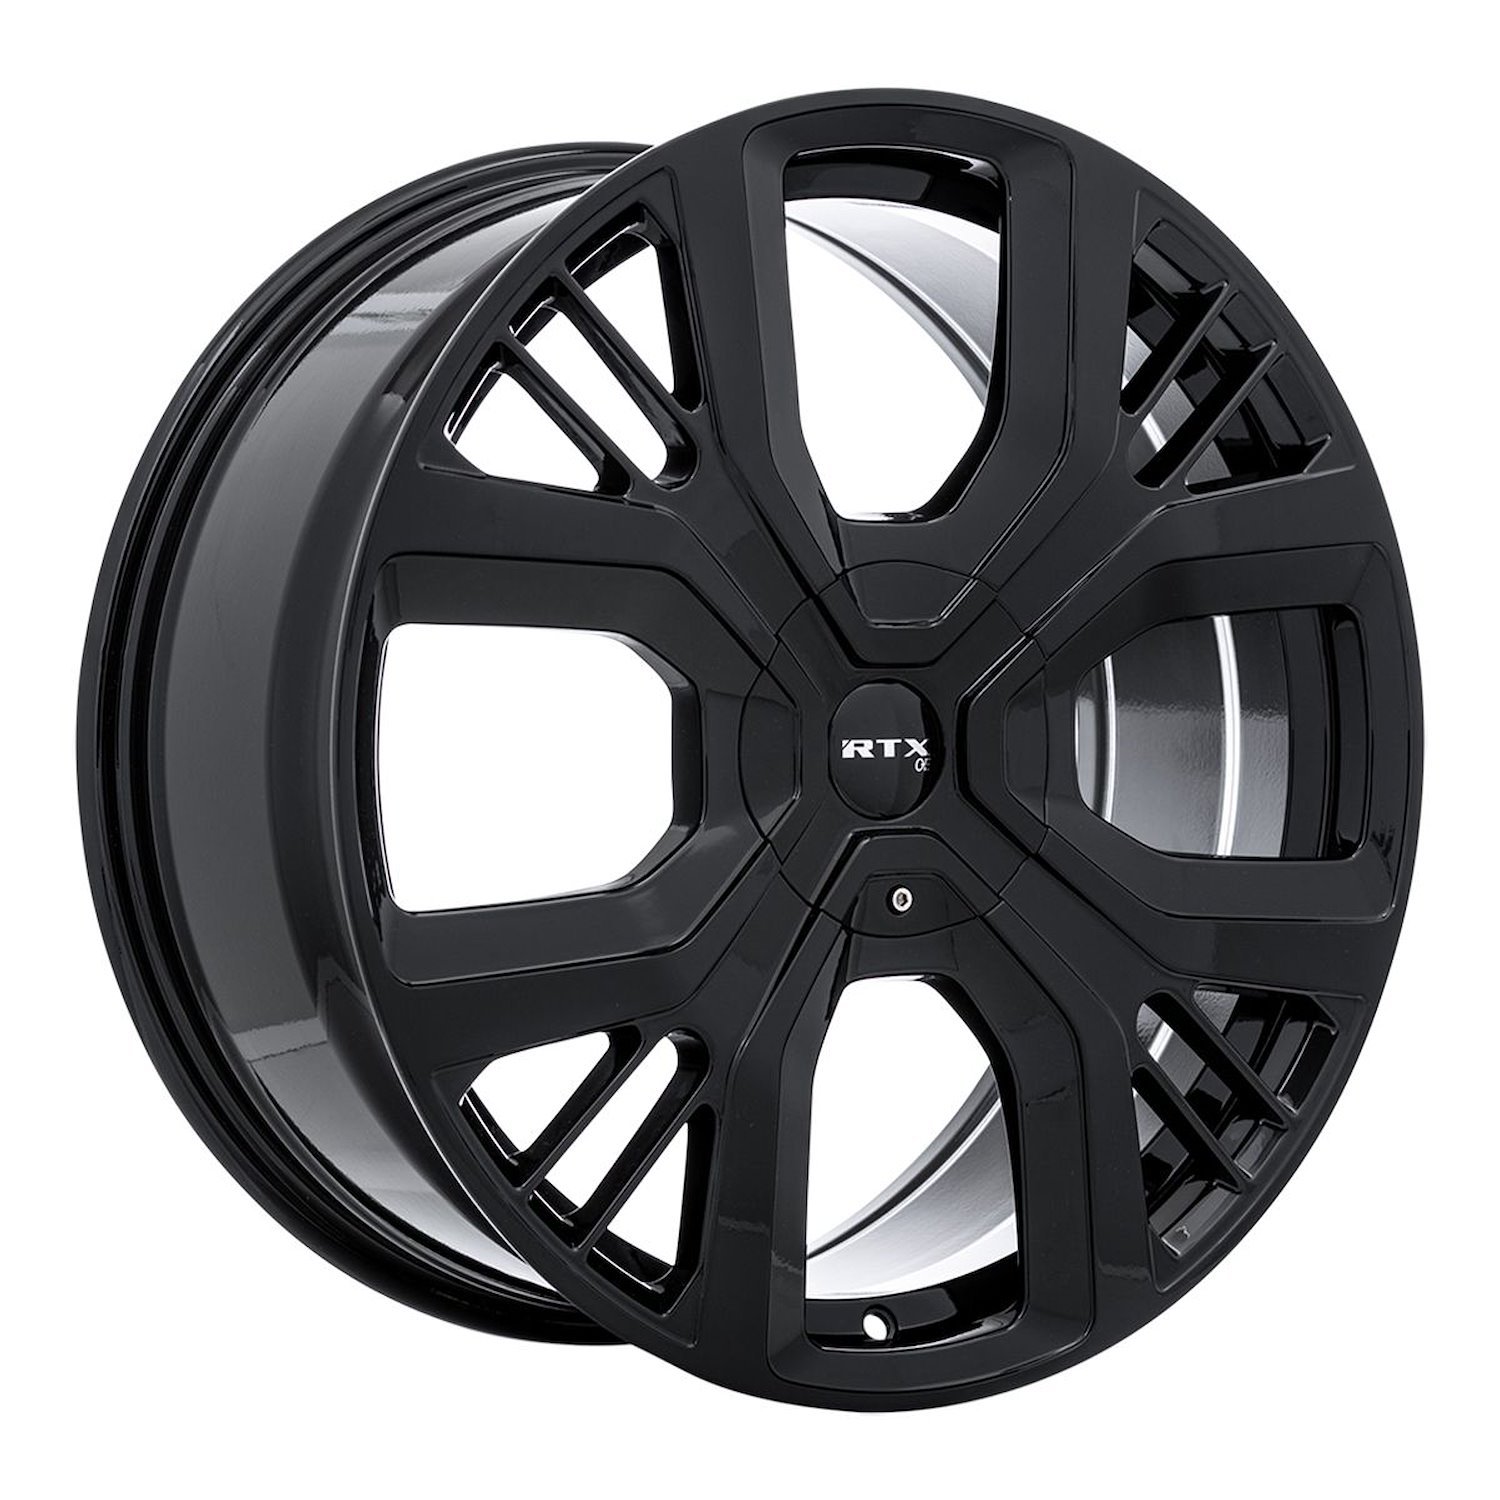 083170 OE-Series PS-01 Wheel [Size: 19" x 8"] Gloss Black Finish